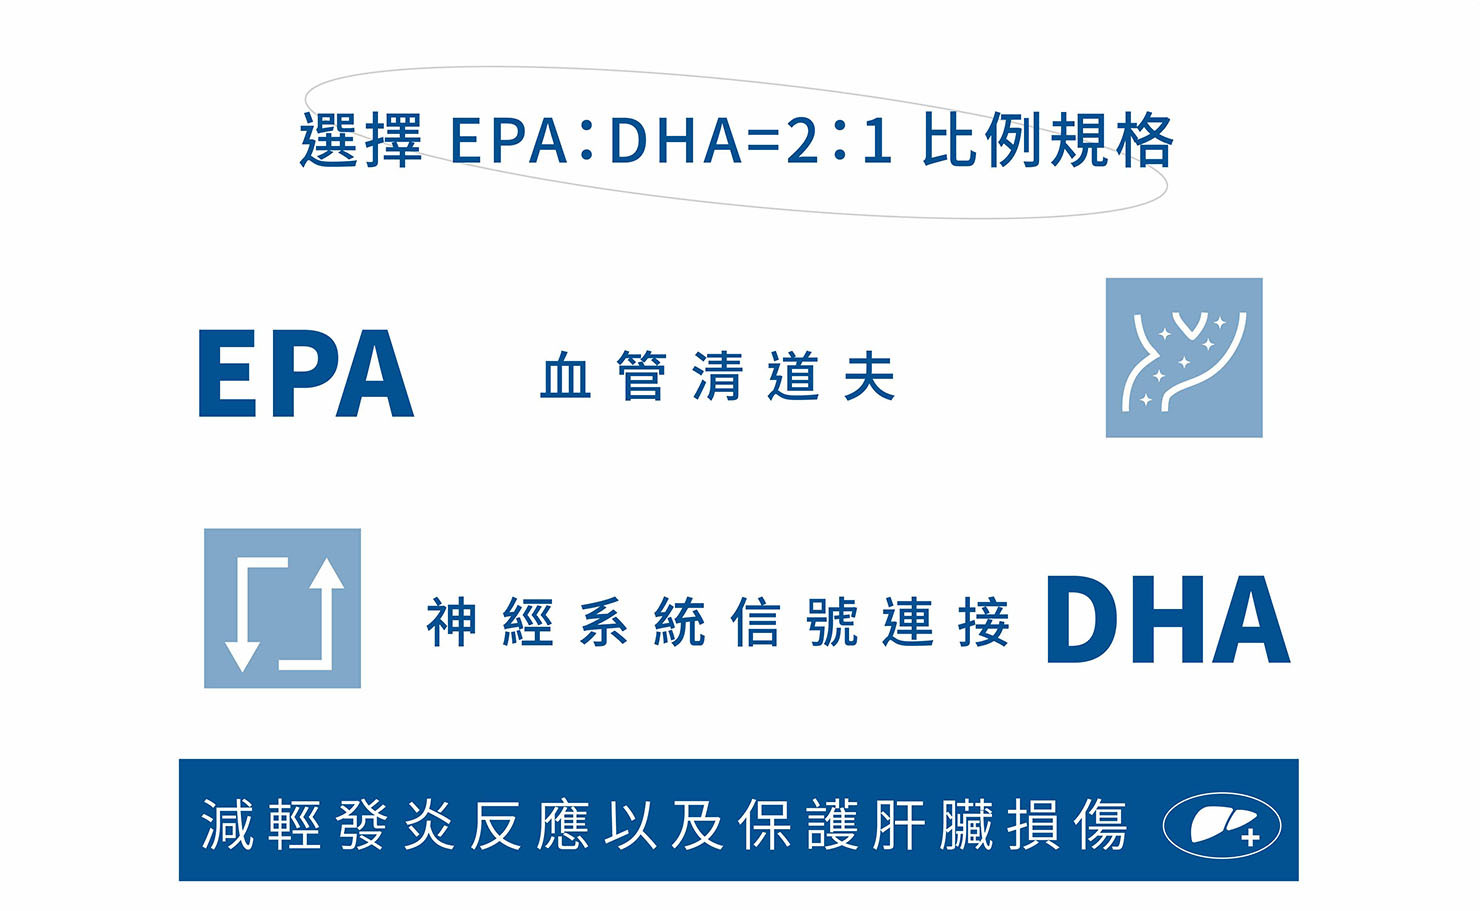 ”EPA=血管清道夫，DHA=活絡思緒，黃金比例是EPA:DHA=2:1